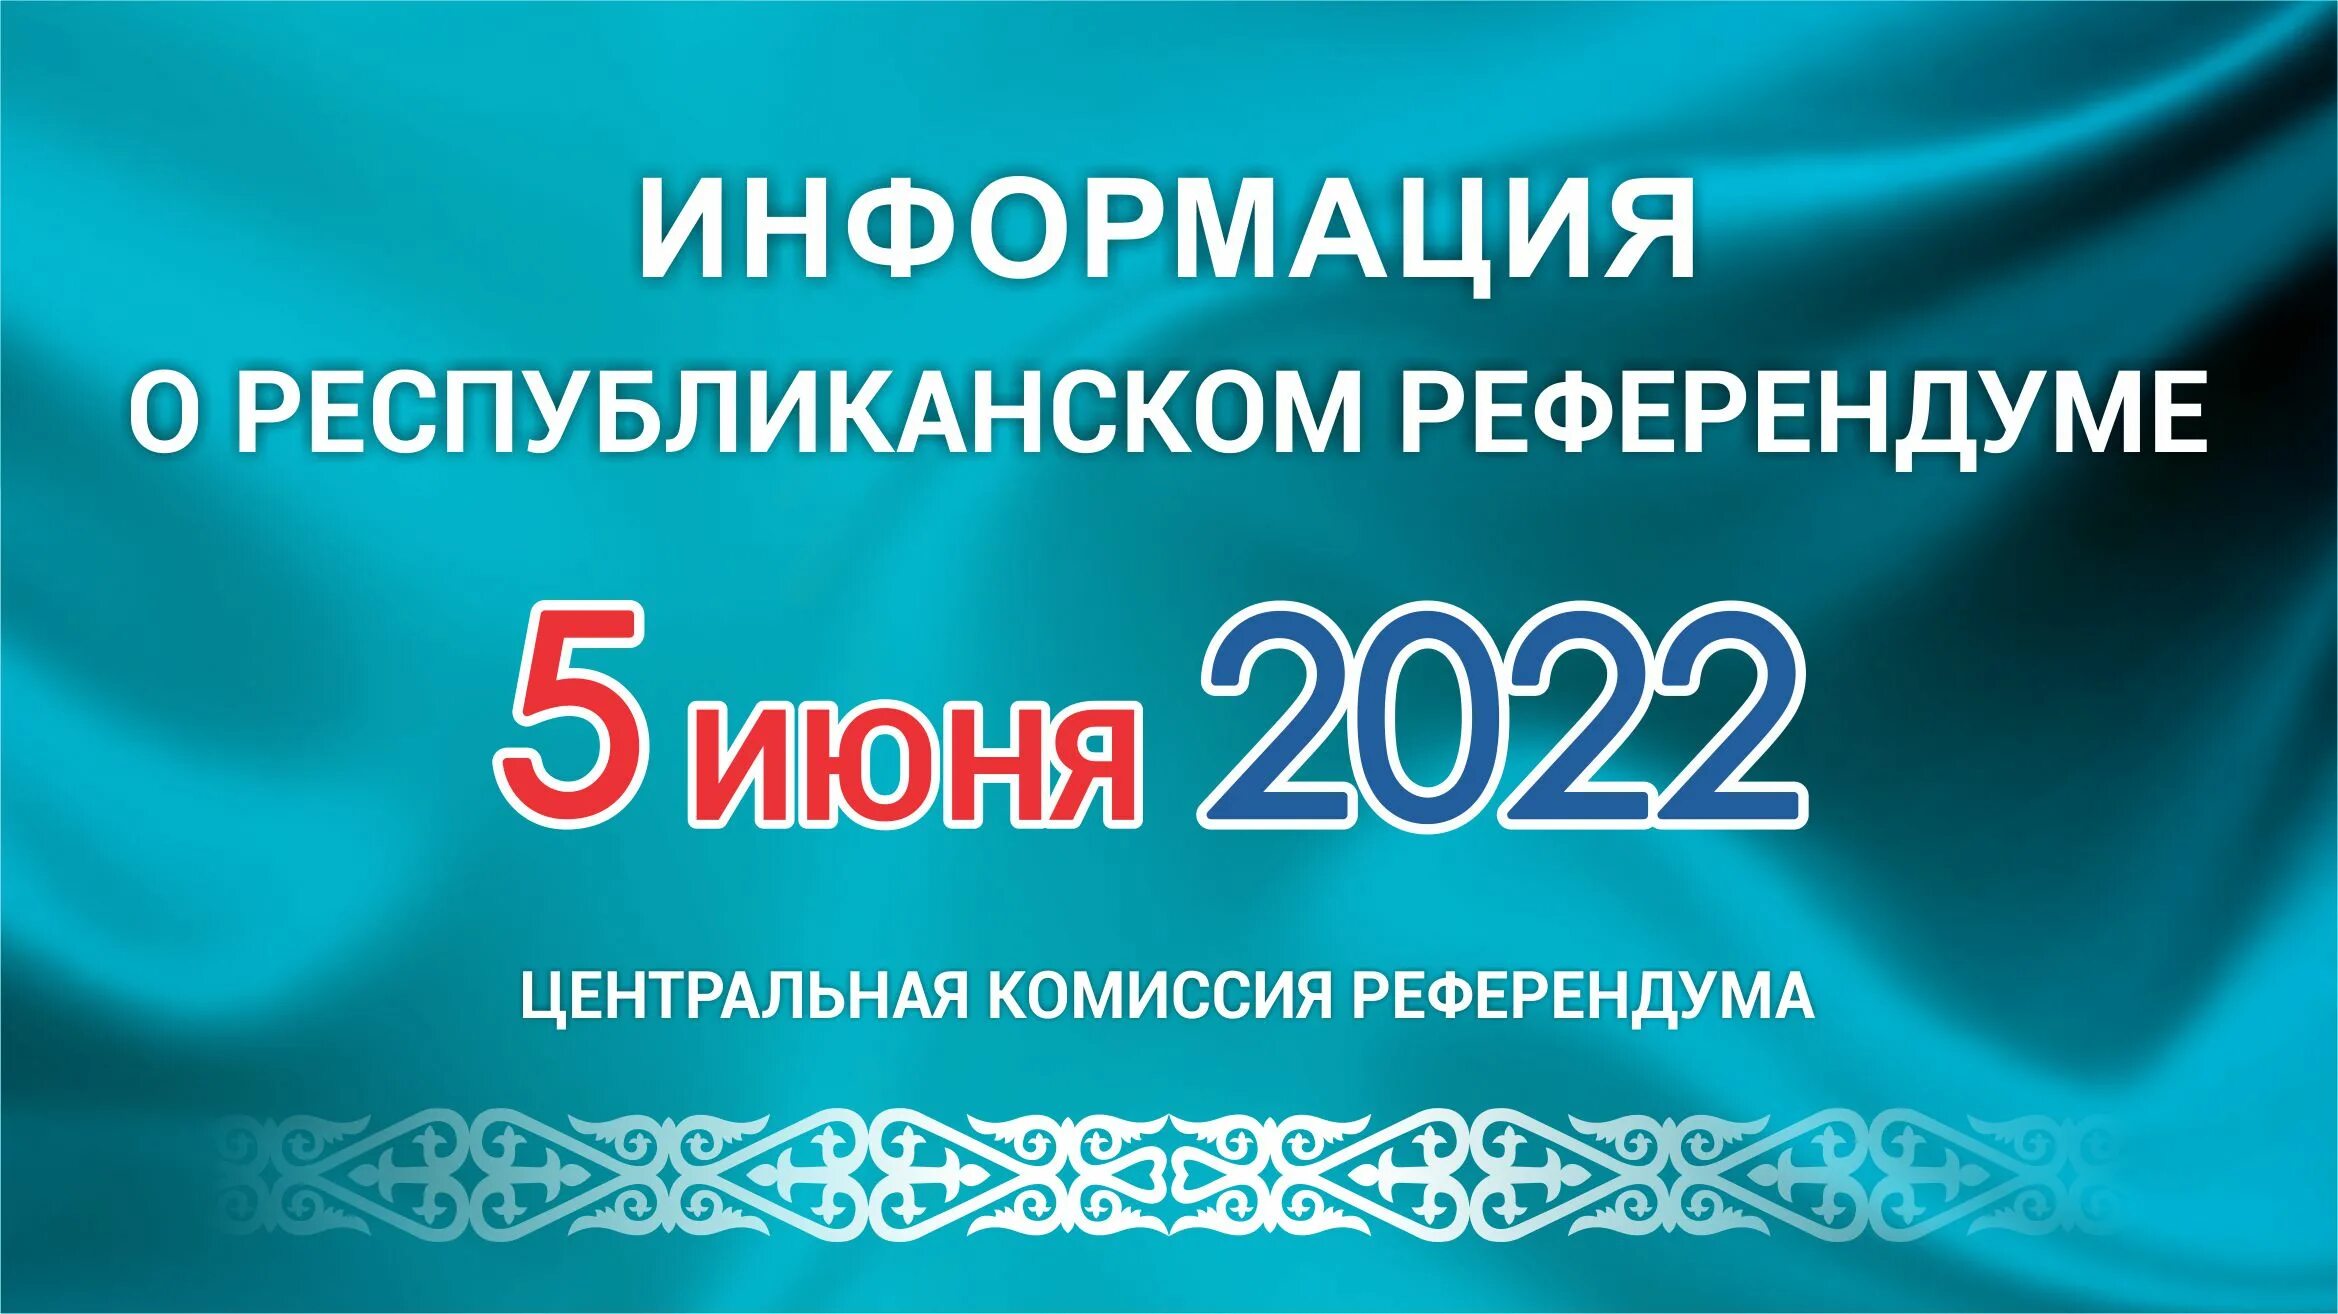 5 05 2022. Референдум 2022. Референдум Казахстан 5 июня. Референдум в Казахстане 5 июня 2022 года в картинках. Референдум баннер.